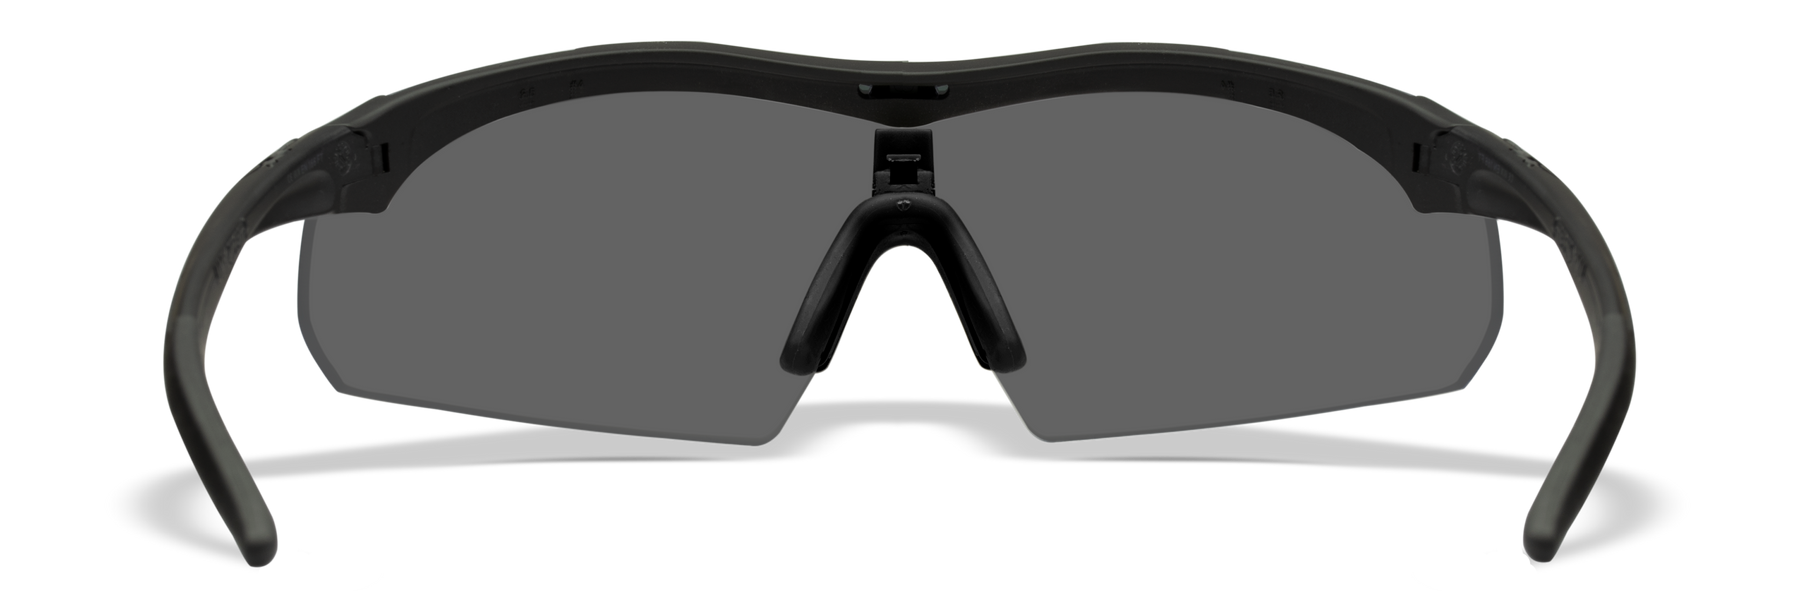 Wiley-X Vapor - Ballistic Eyewear Tactical Sunglasses